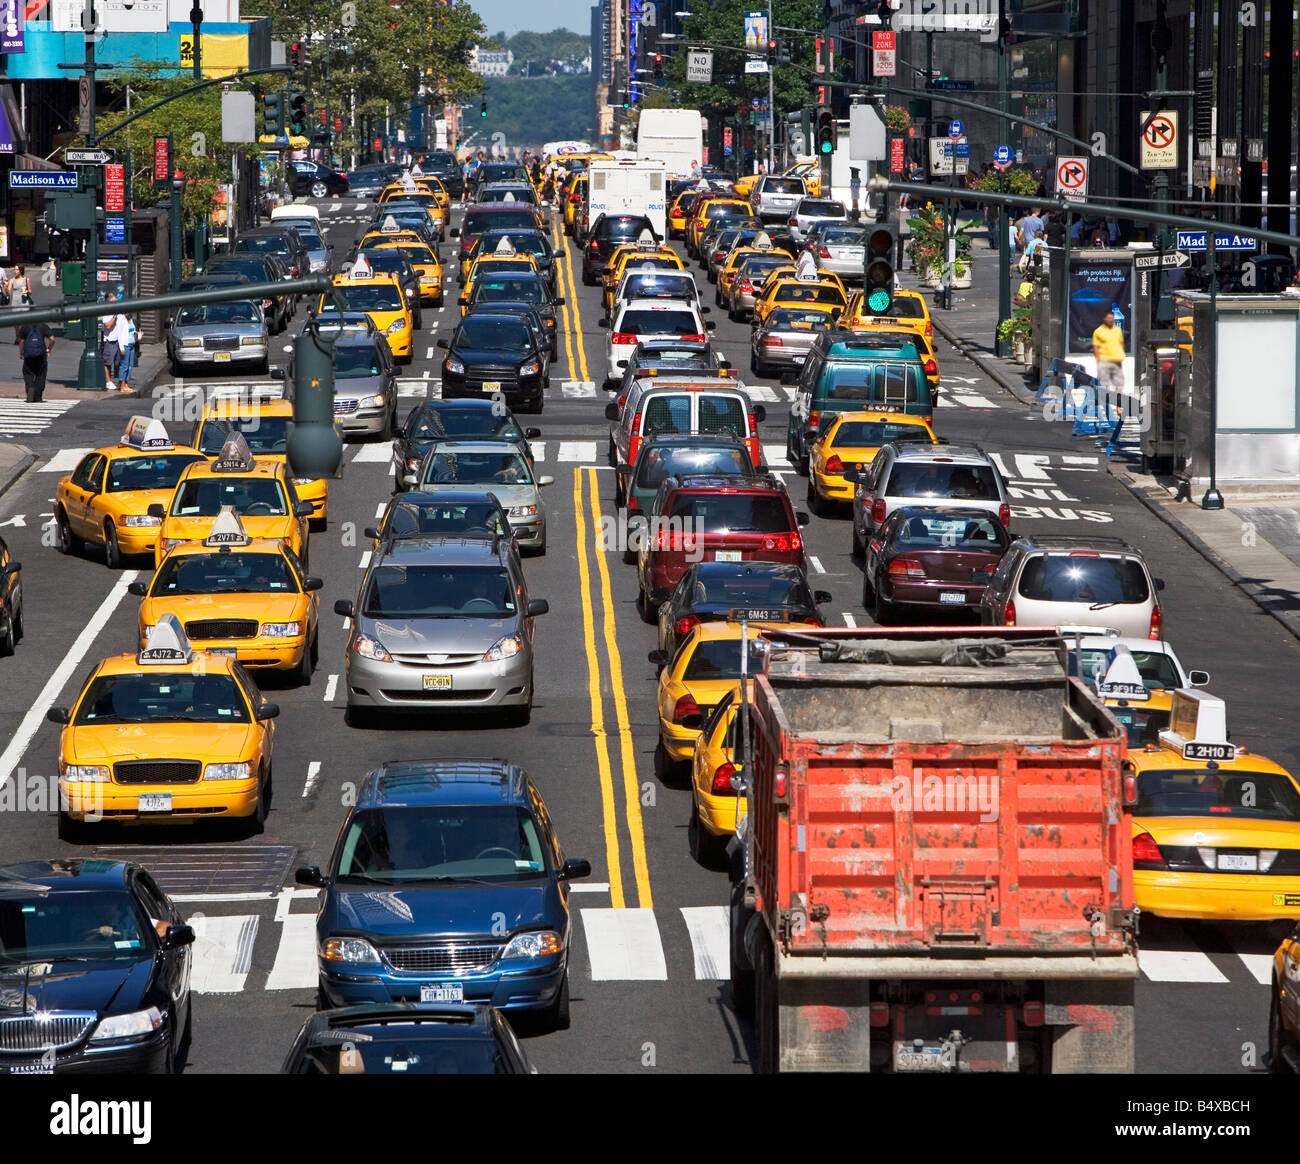 Traffic jam in city Stock Photo